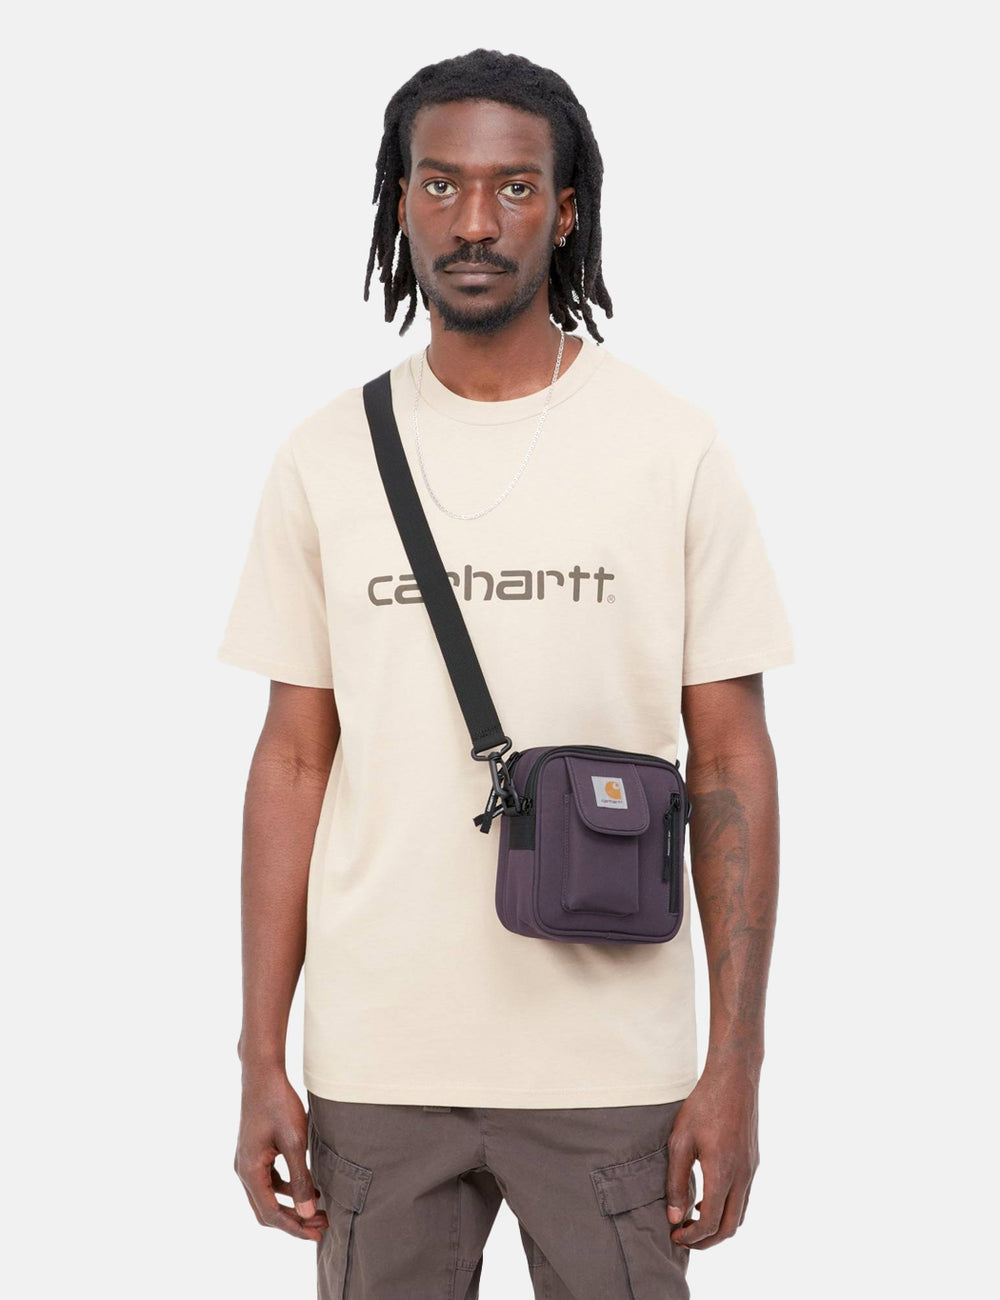 carhartt essentials bag